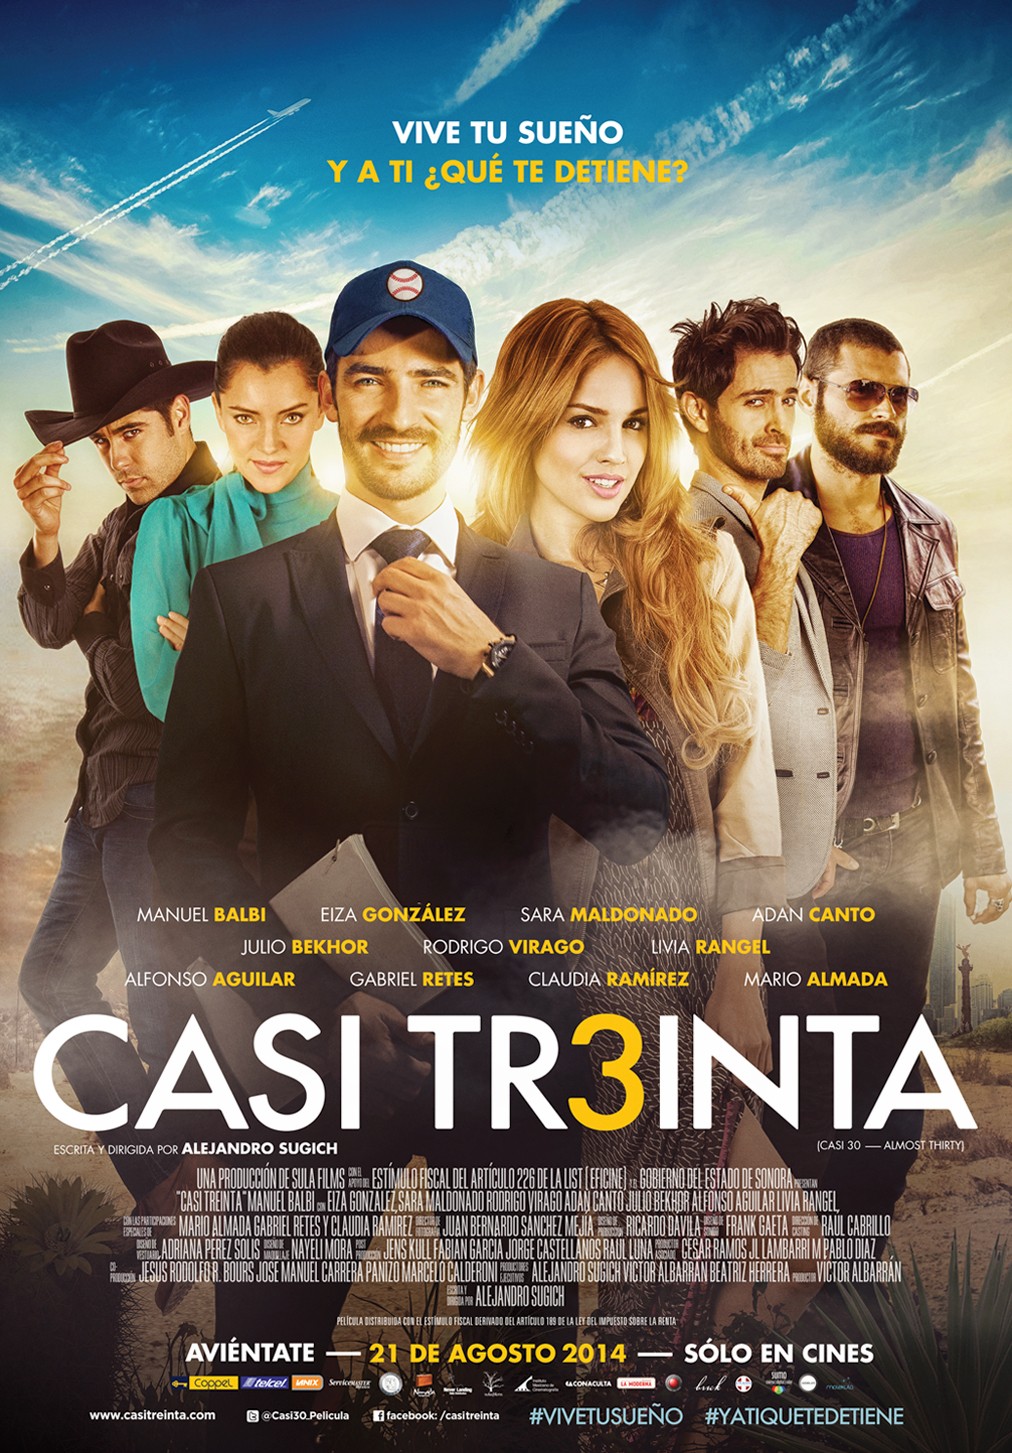 Extra Large Movie Poster Image for Casi treinta 